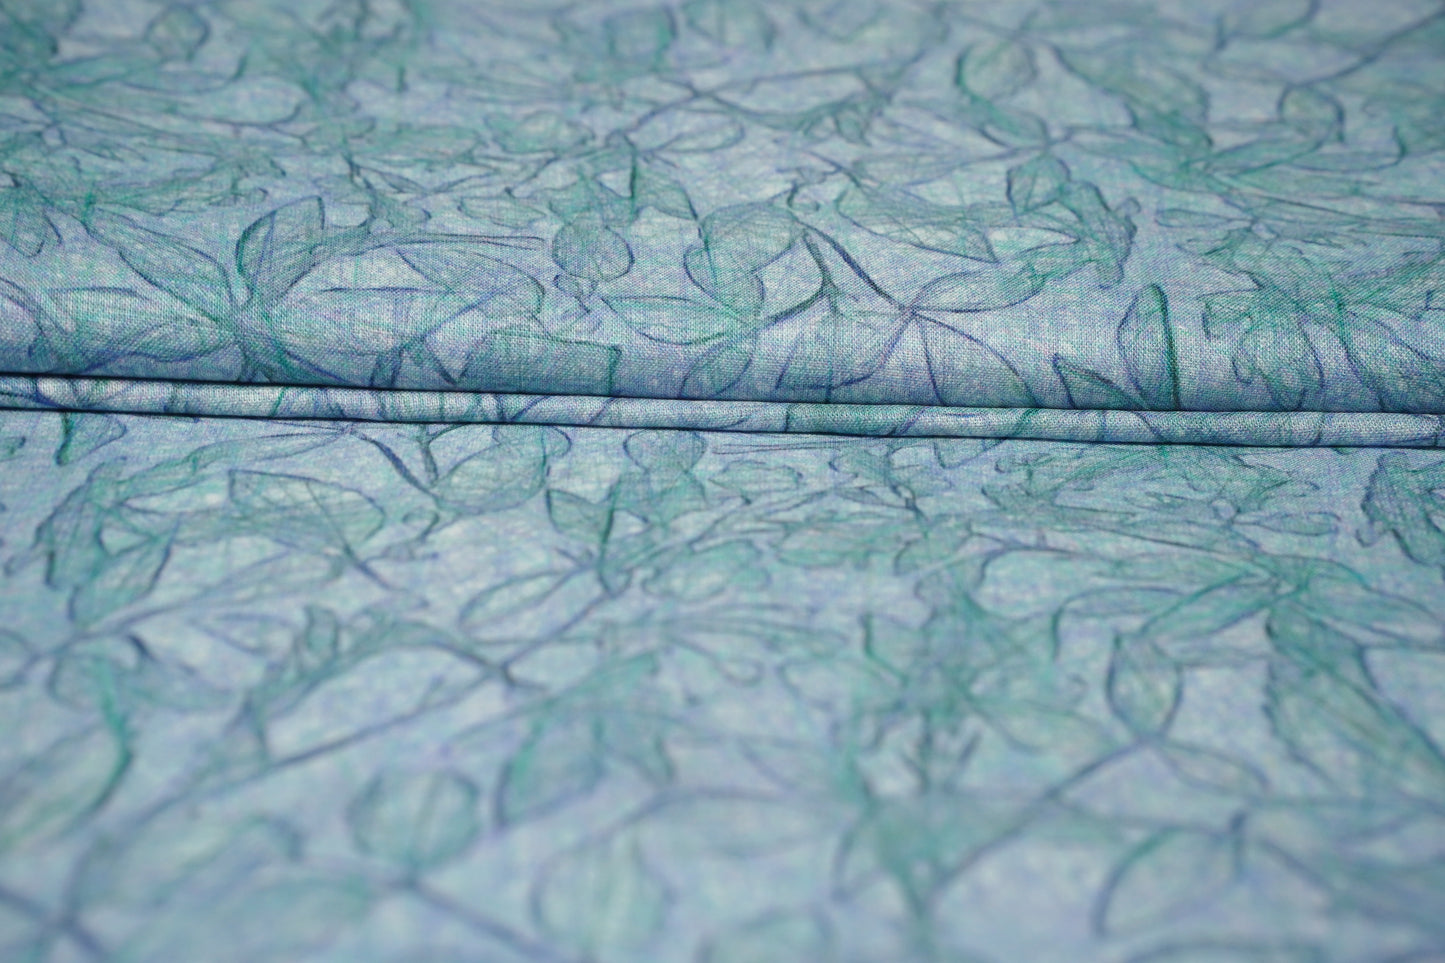 Digital Floral Print on Sky Blue base - Linen Fabric - OrganoLinen